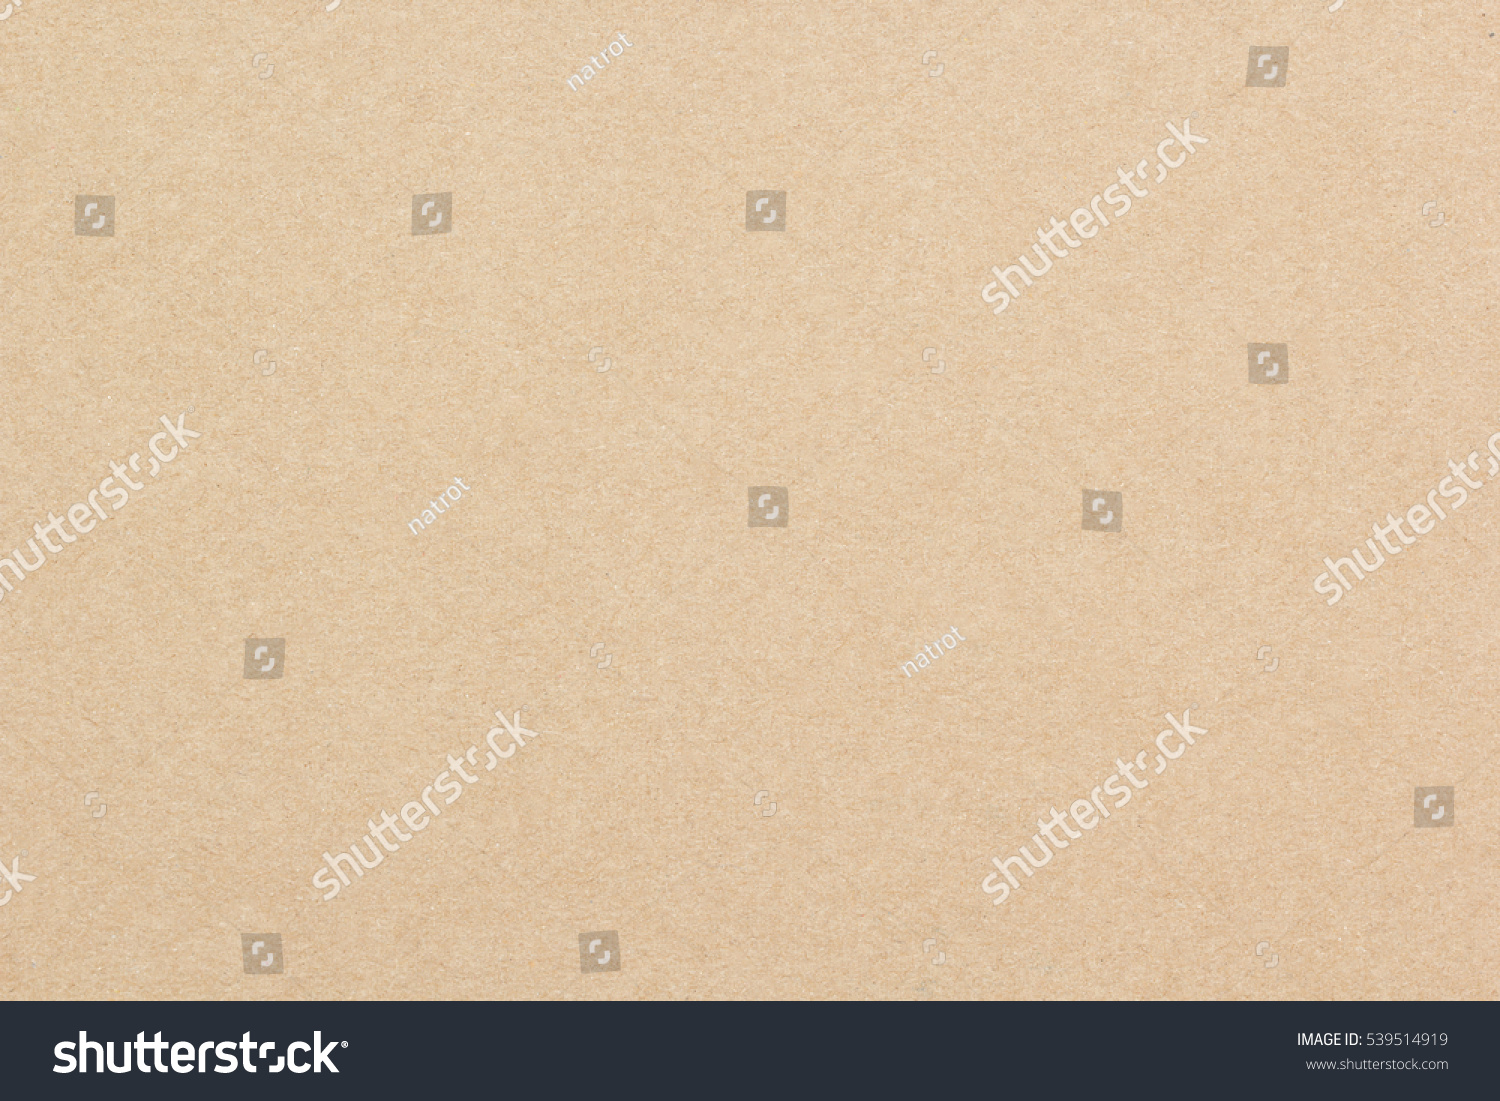 Brown paper texture #539514919